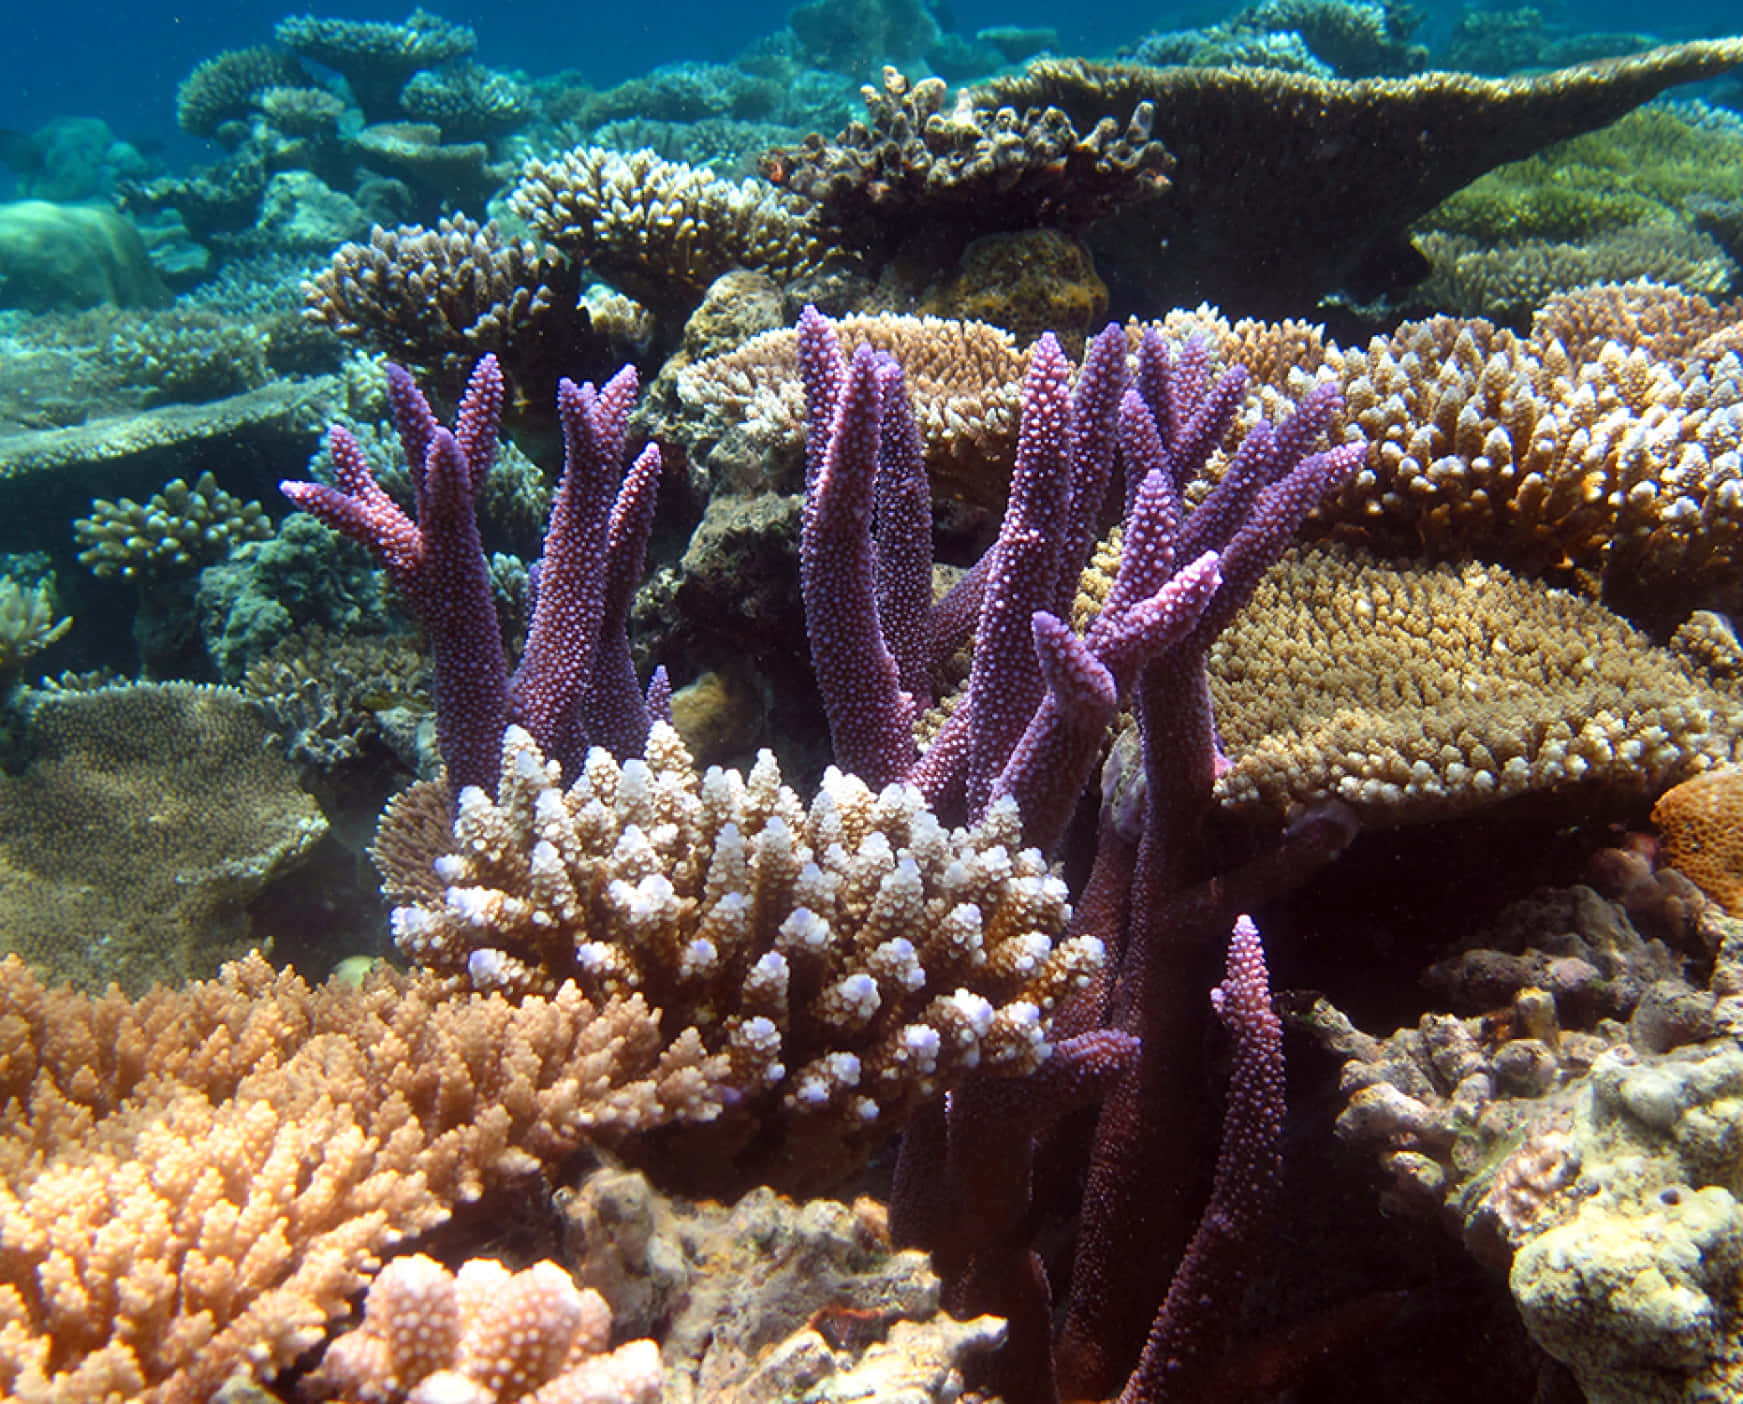 Vibrant Underwater Splendor in a Coral Reef